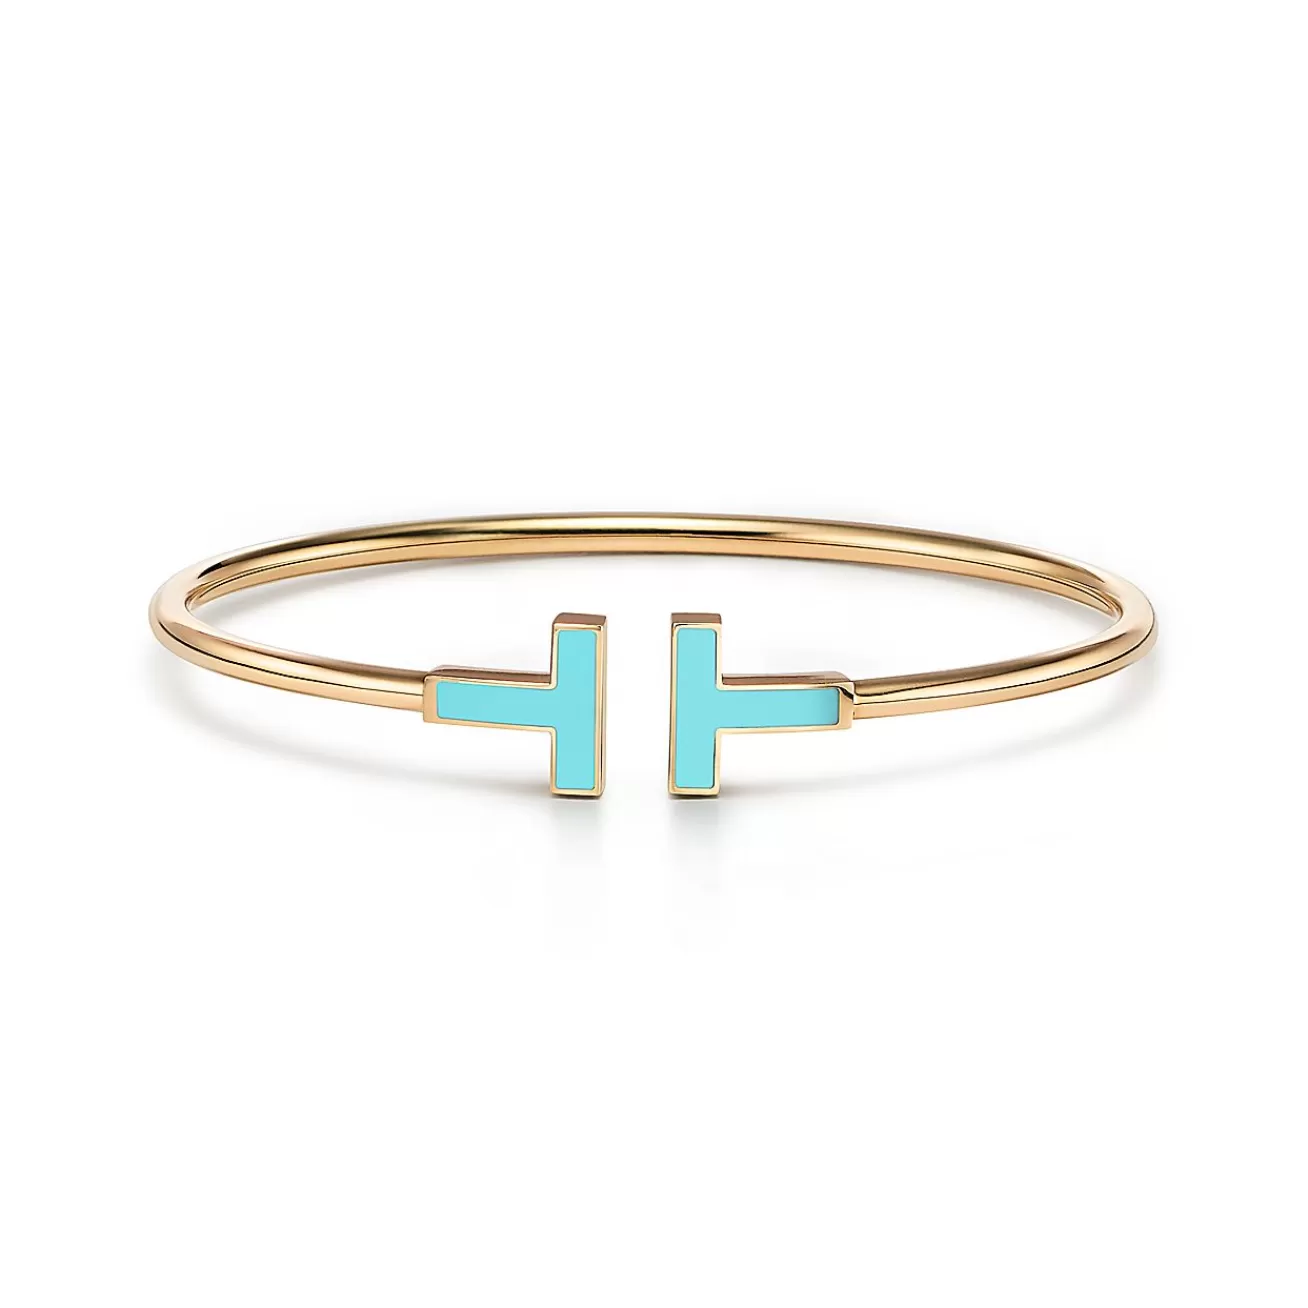 Tiffany & Co. Tiffany T turquoise wire bracelet in 18k gold, medium. | ^ Bracelets | Gold Jewelry